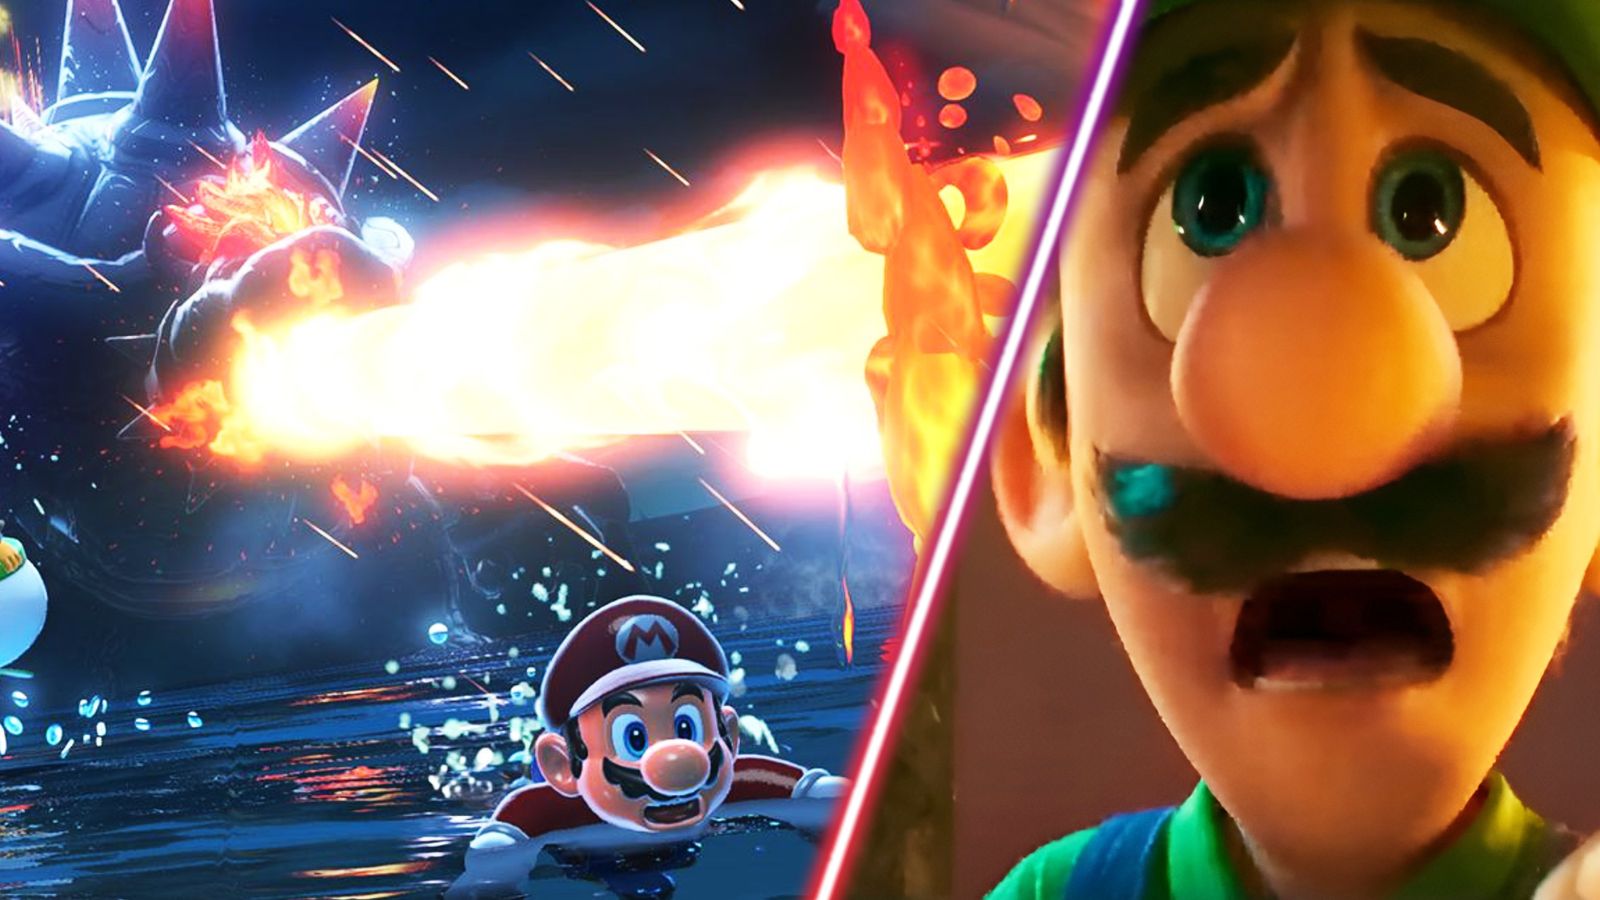 Mario and Luigi looking shocked.